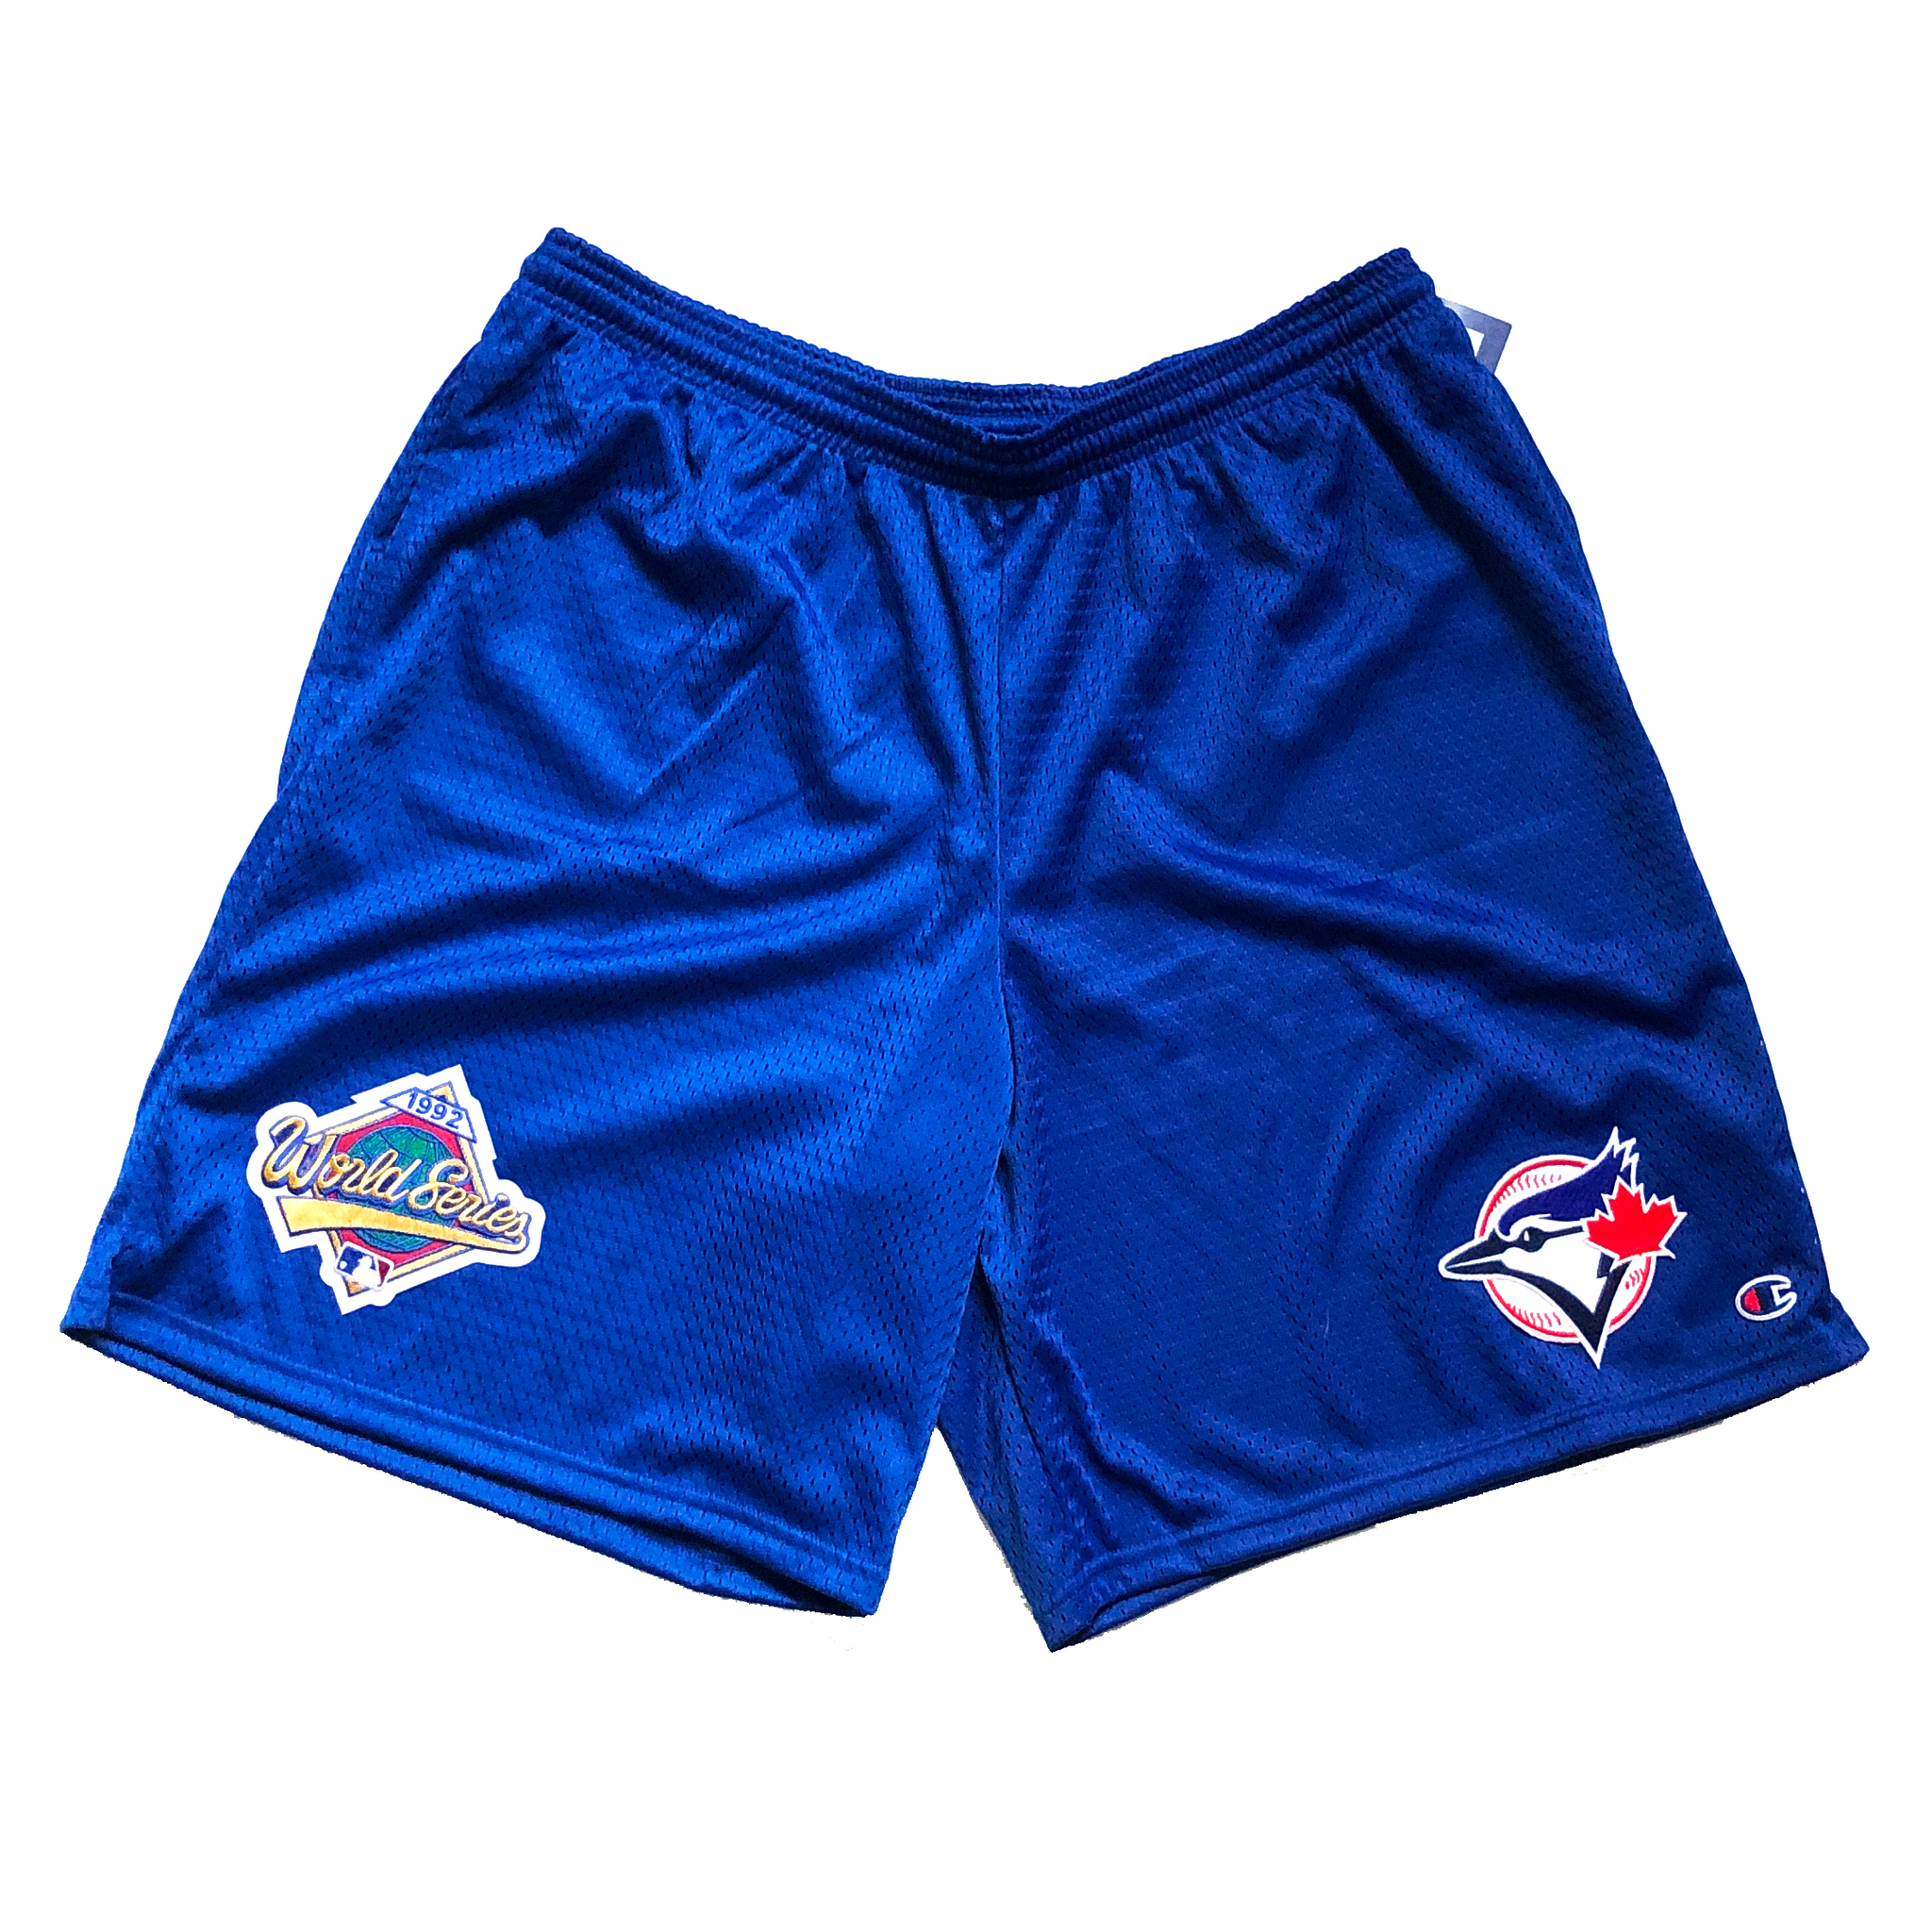 1992 World Series Champions Blue Jays Customized Men's Champion 9" Mesh Shorts